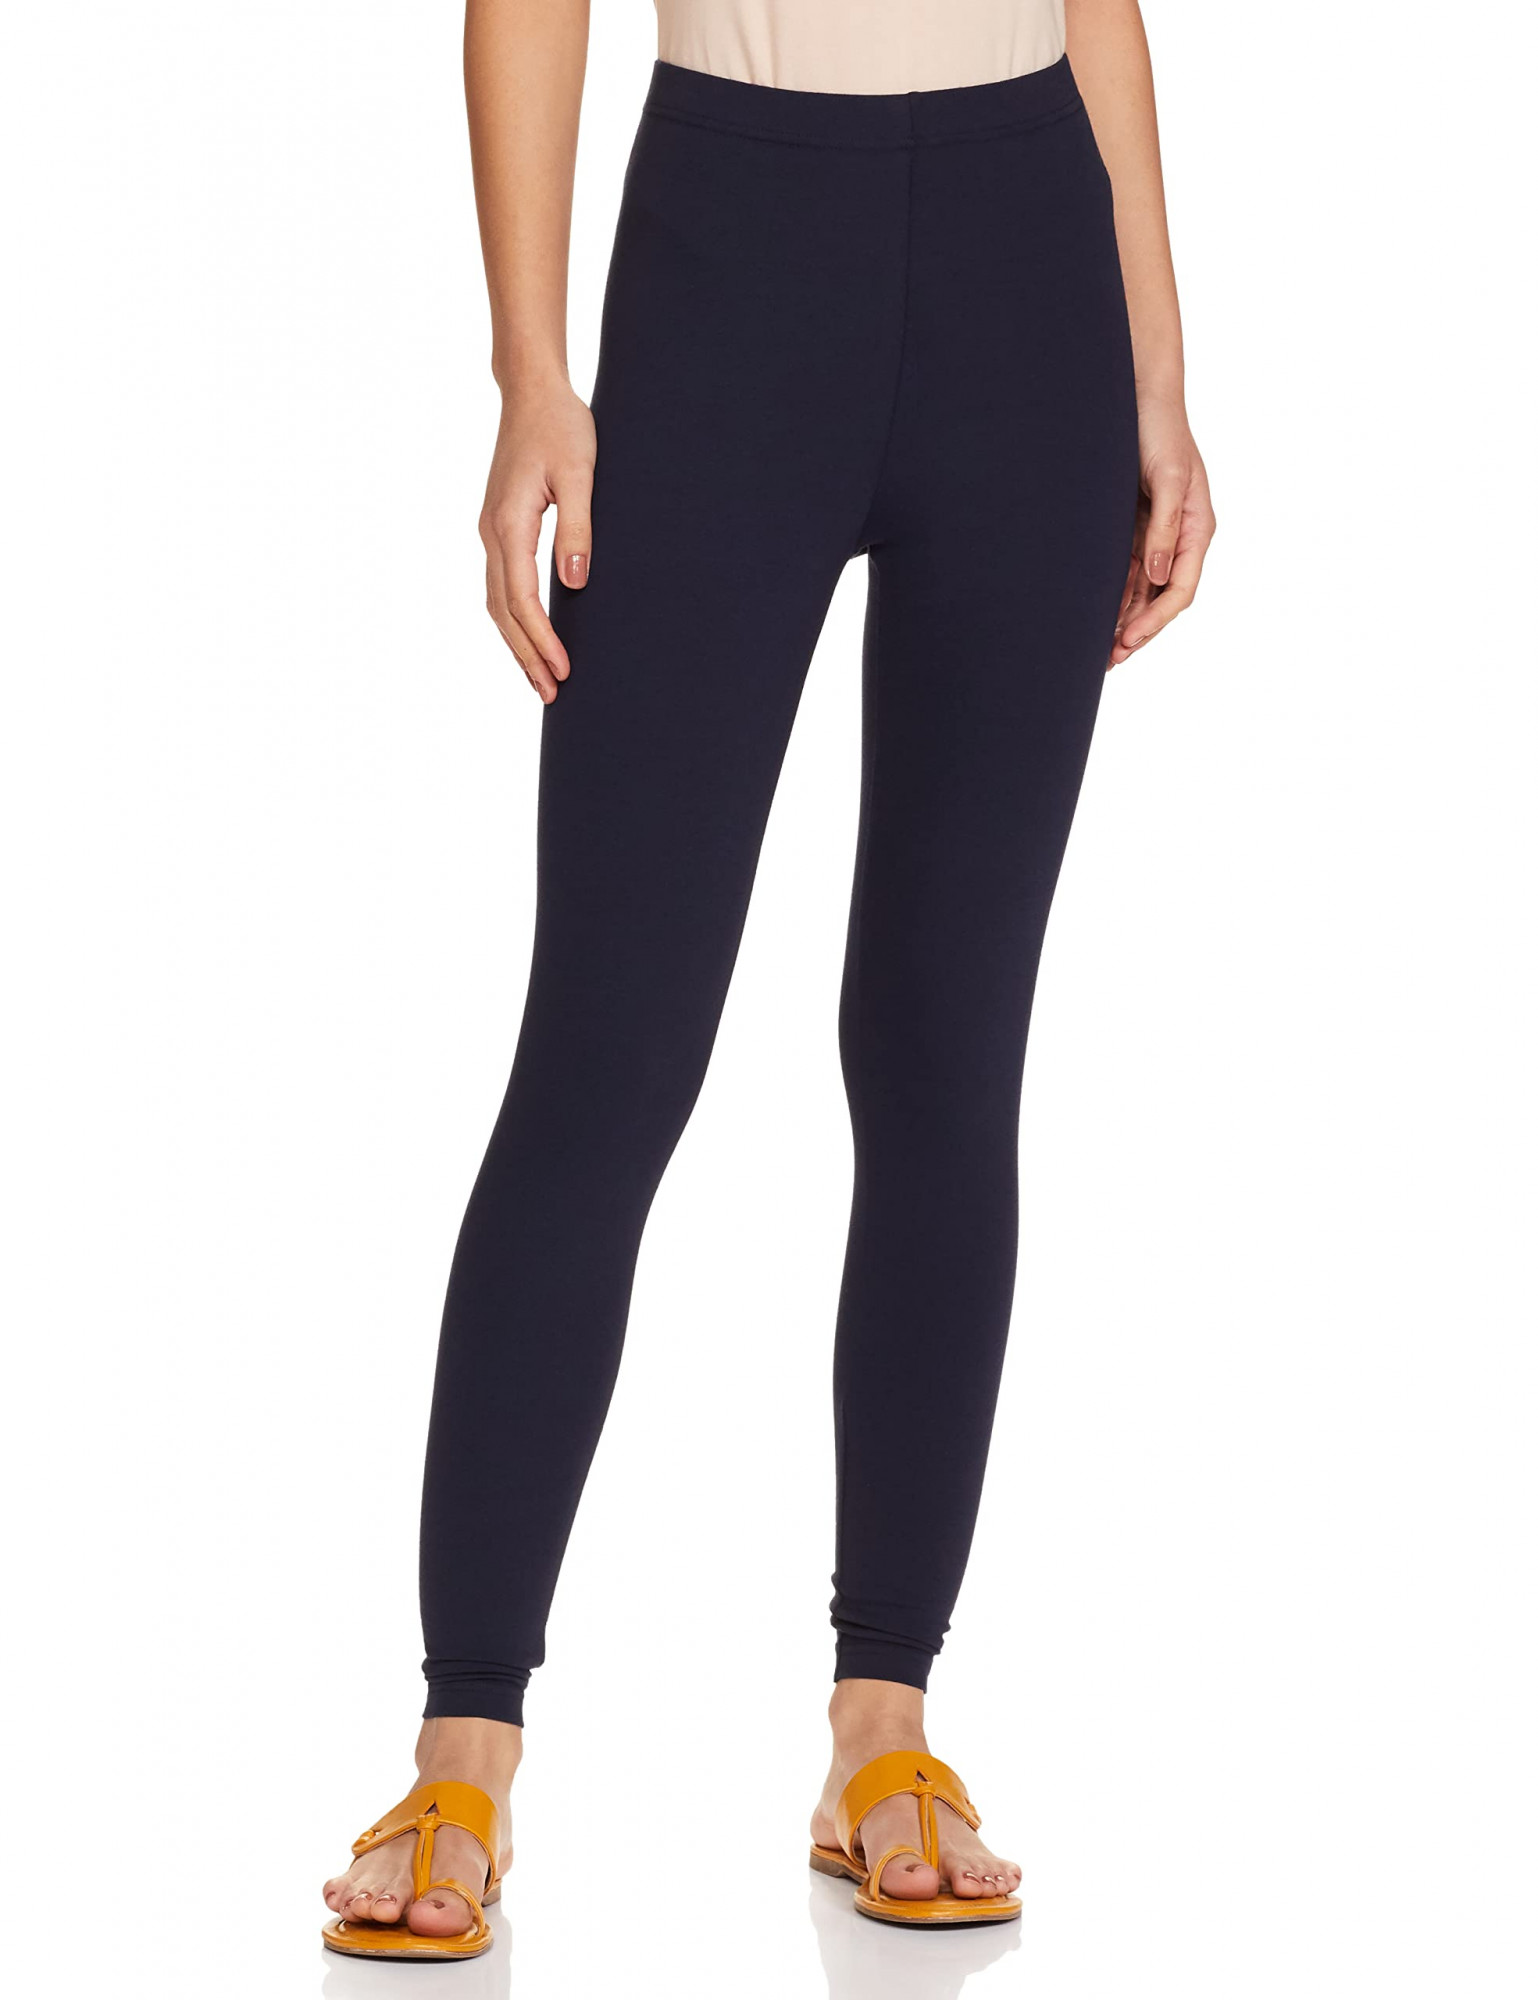 https://www.fastemi.com/uploads/fastemicom/products/jockey-womenamp039s-slim-fit-leggings-with-ultrasoft-and-durable-waistband-aw87navy-blazerxl-135804942161612_l.jpg